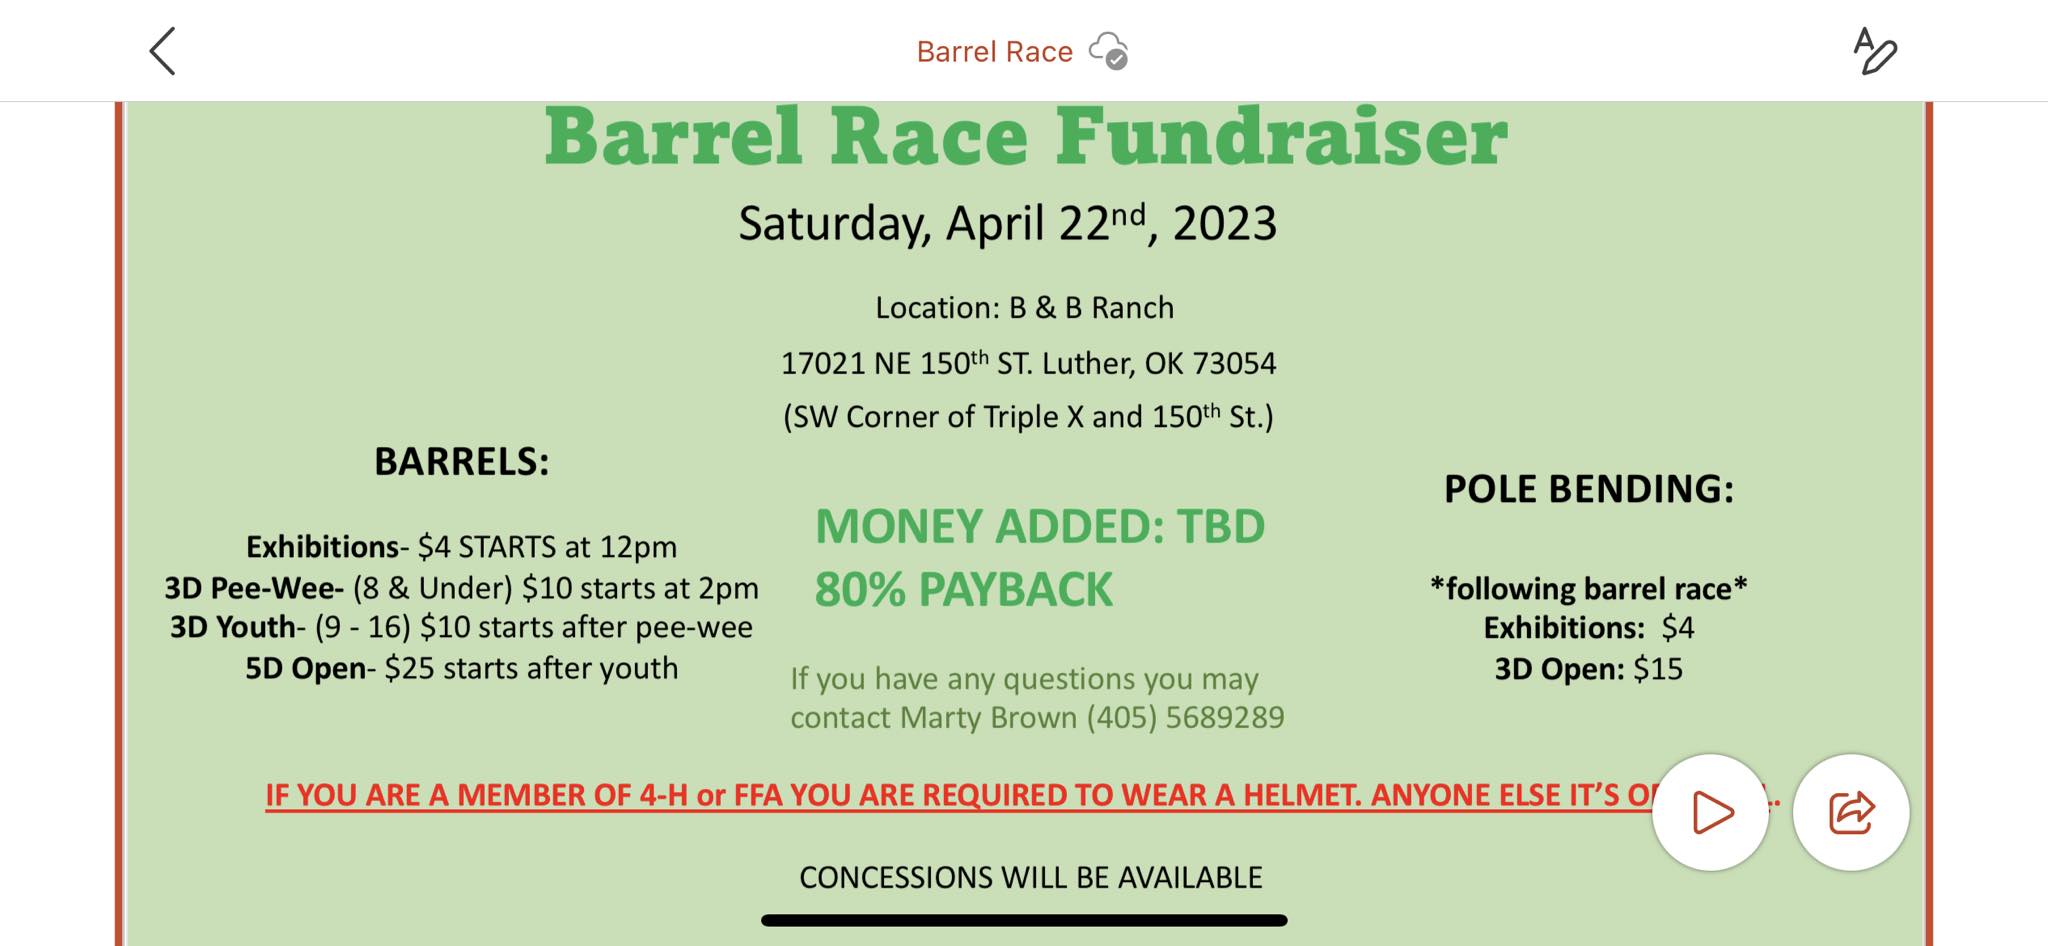 Barrel Race Fundraiser